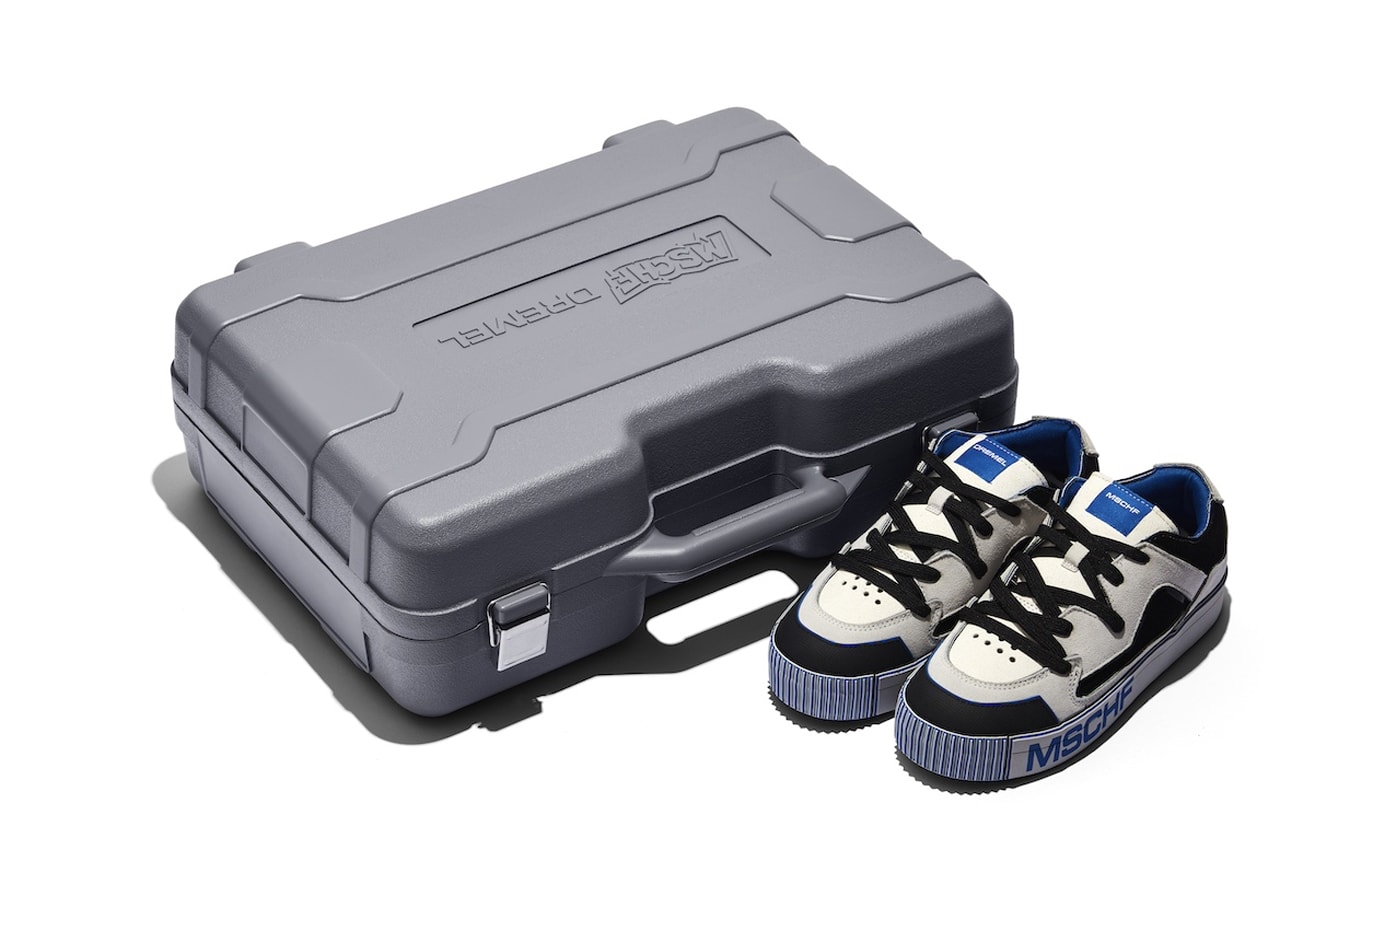 Dremel x MSCHF Gobstomper Has an Official Release Date MSCHF009-DL tool company unique versatile kit sneaker shoe 